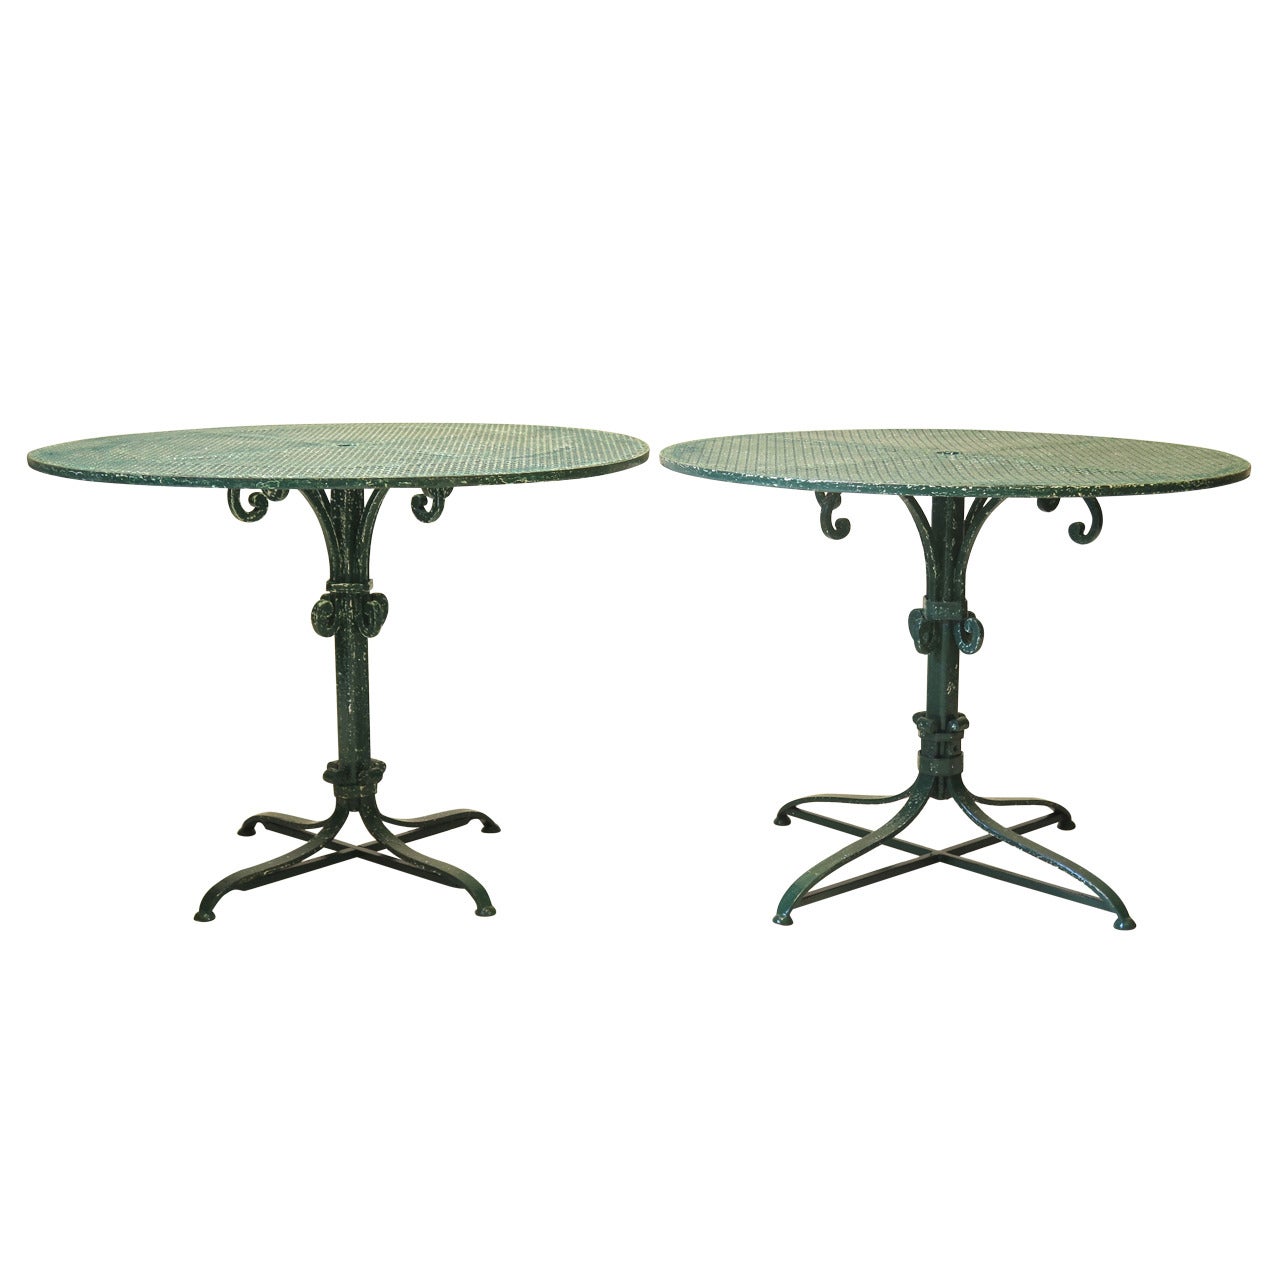 Elegant Pair of Wrought Iron Garden Tables - France, Circa 1920s